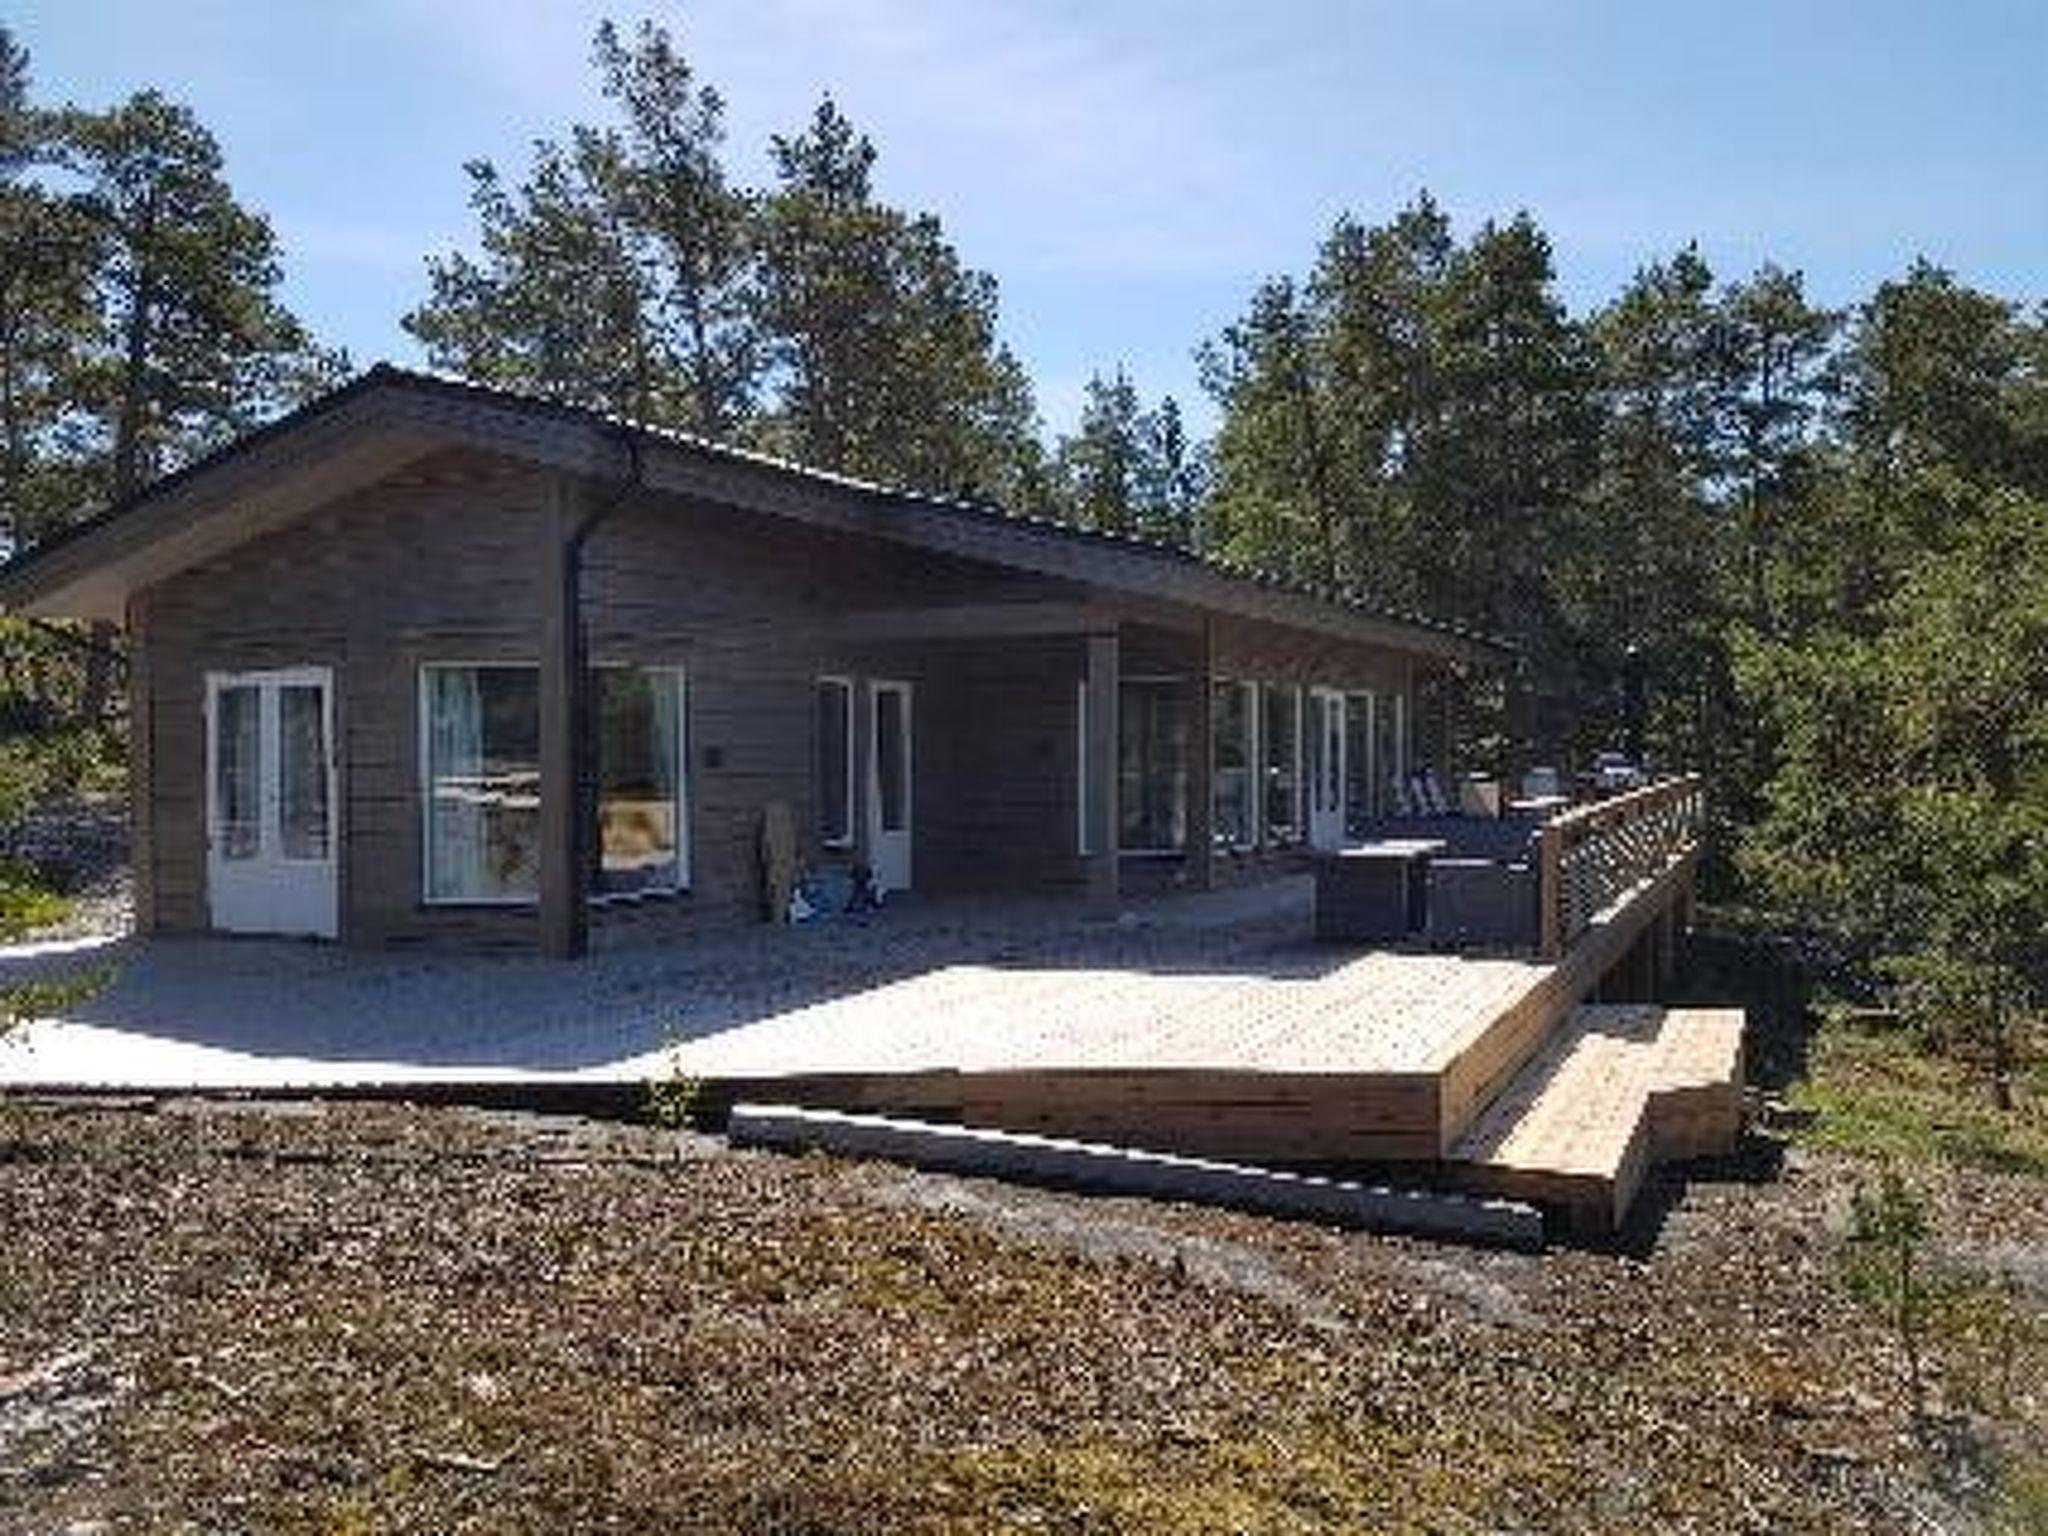 Photo 5 - 4 bedroom House in Kimitoön with sauna